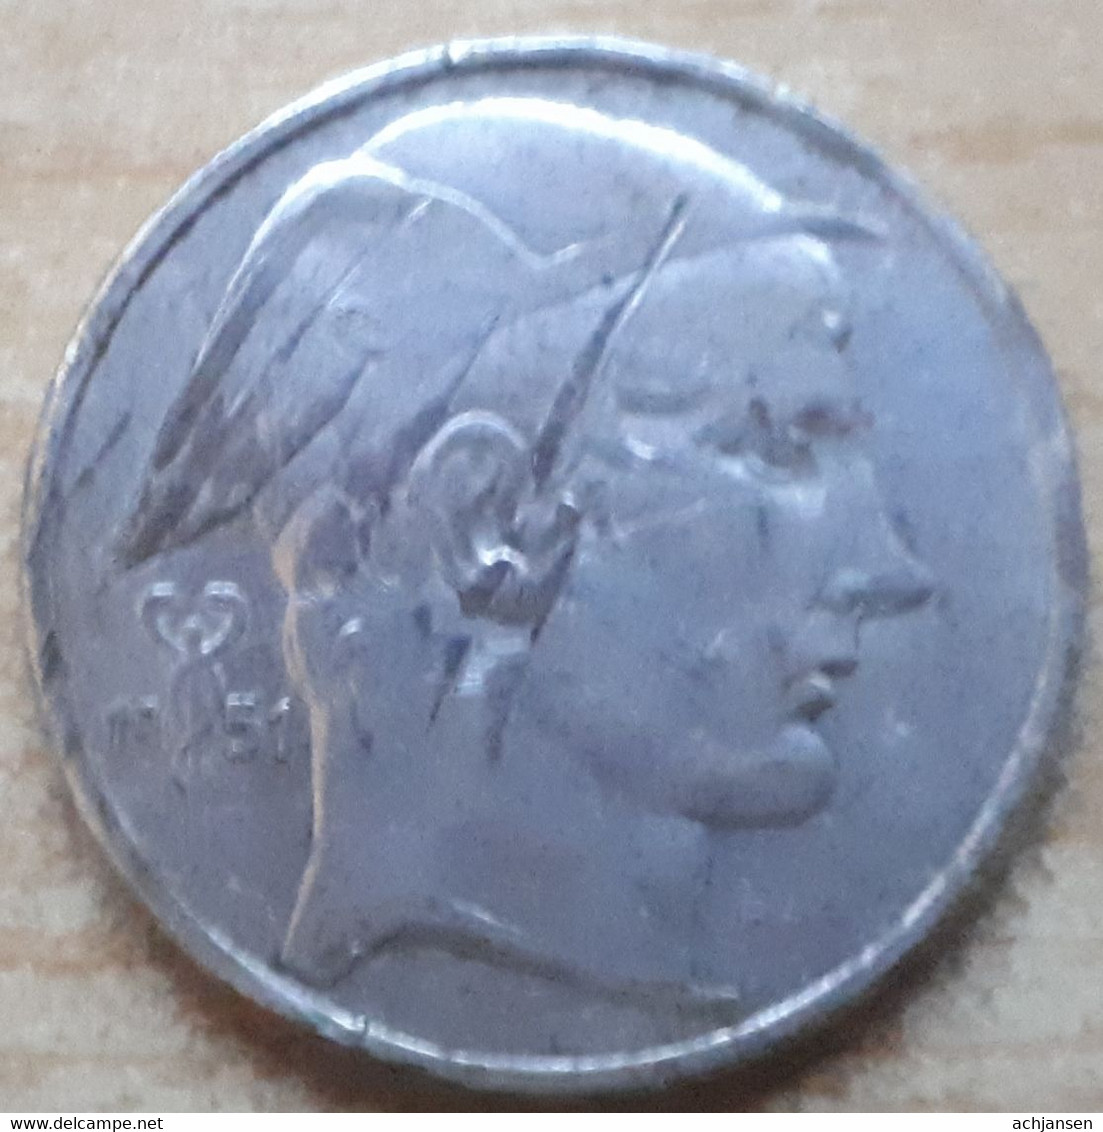 Belgium, 50 Frank 1951 - Silver - 50 Franc